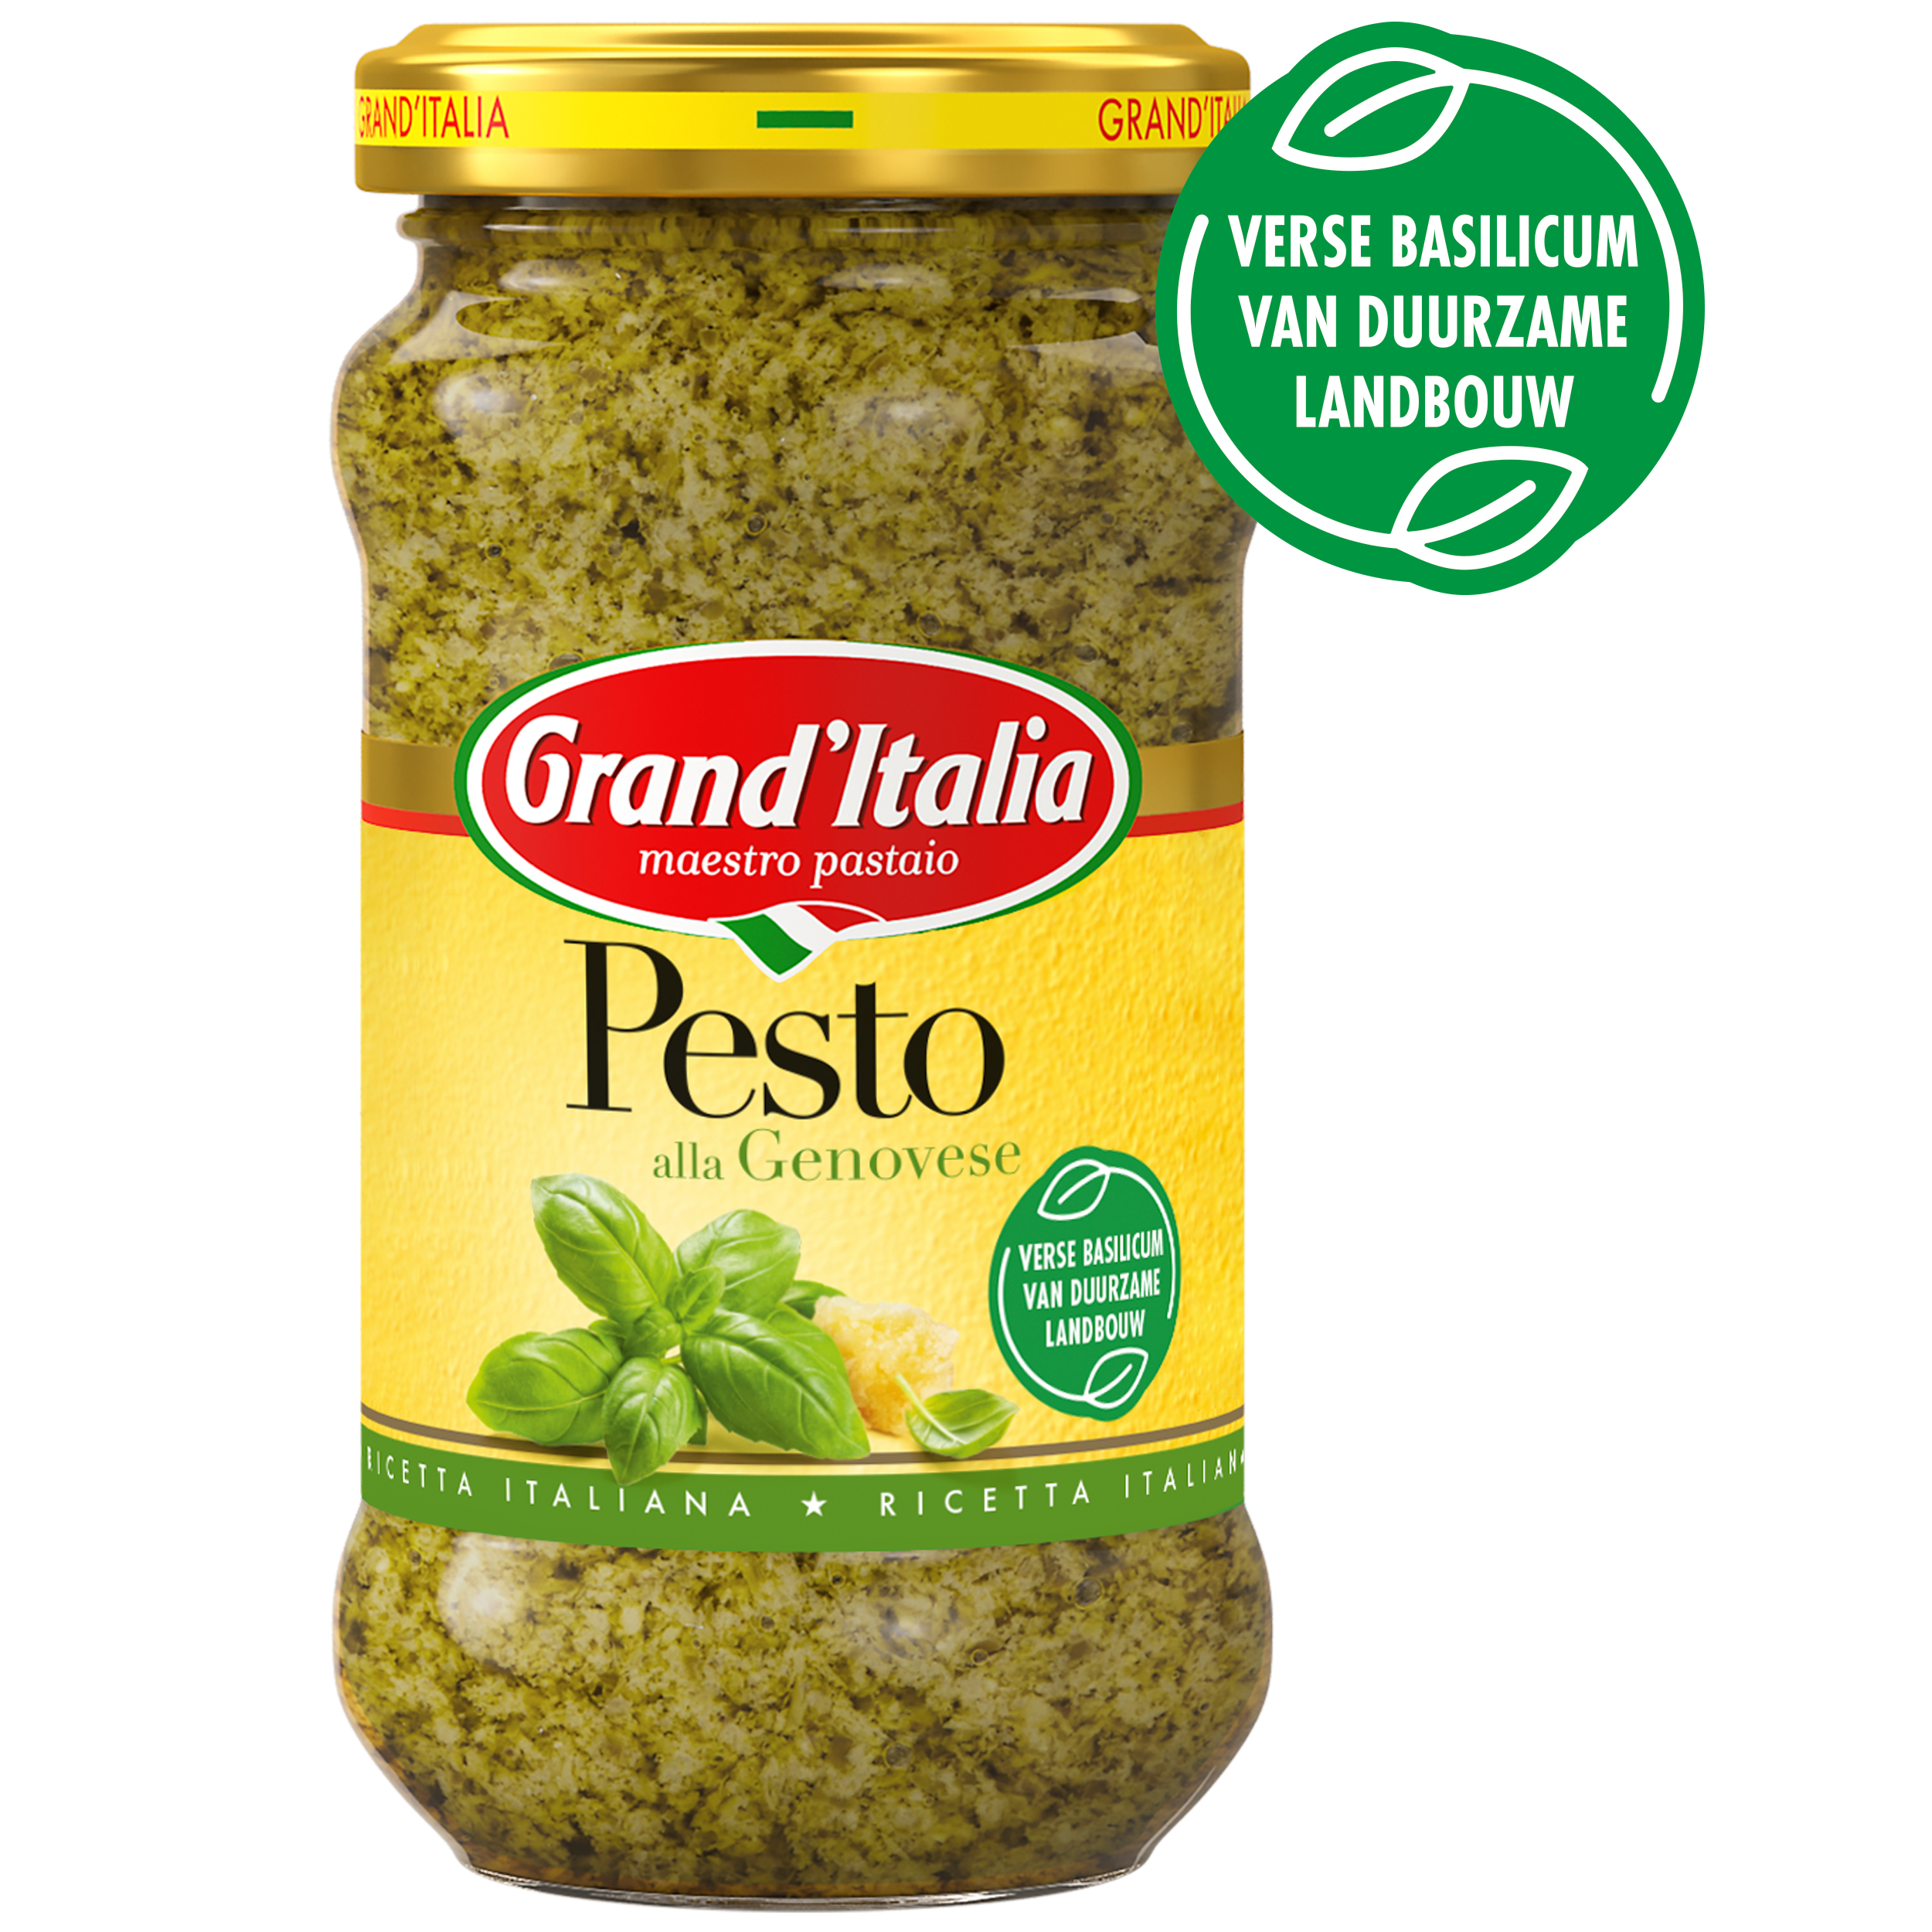 Pesto alla Genovese 185g Grand'Italia - claim